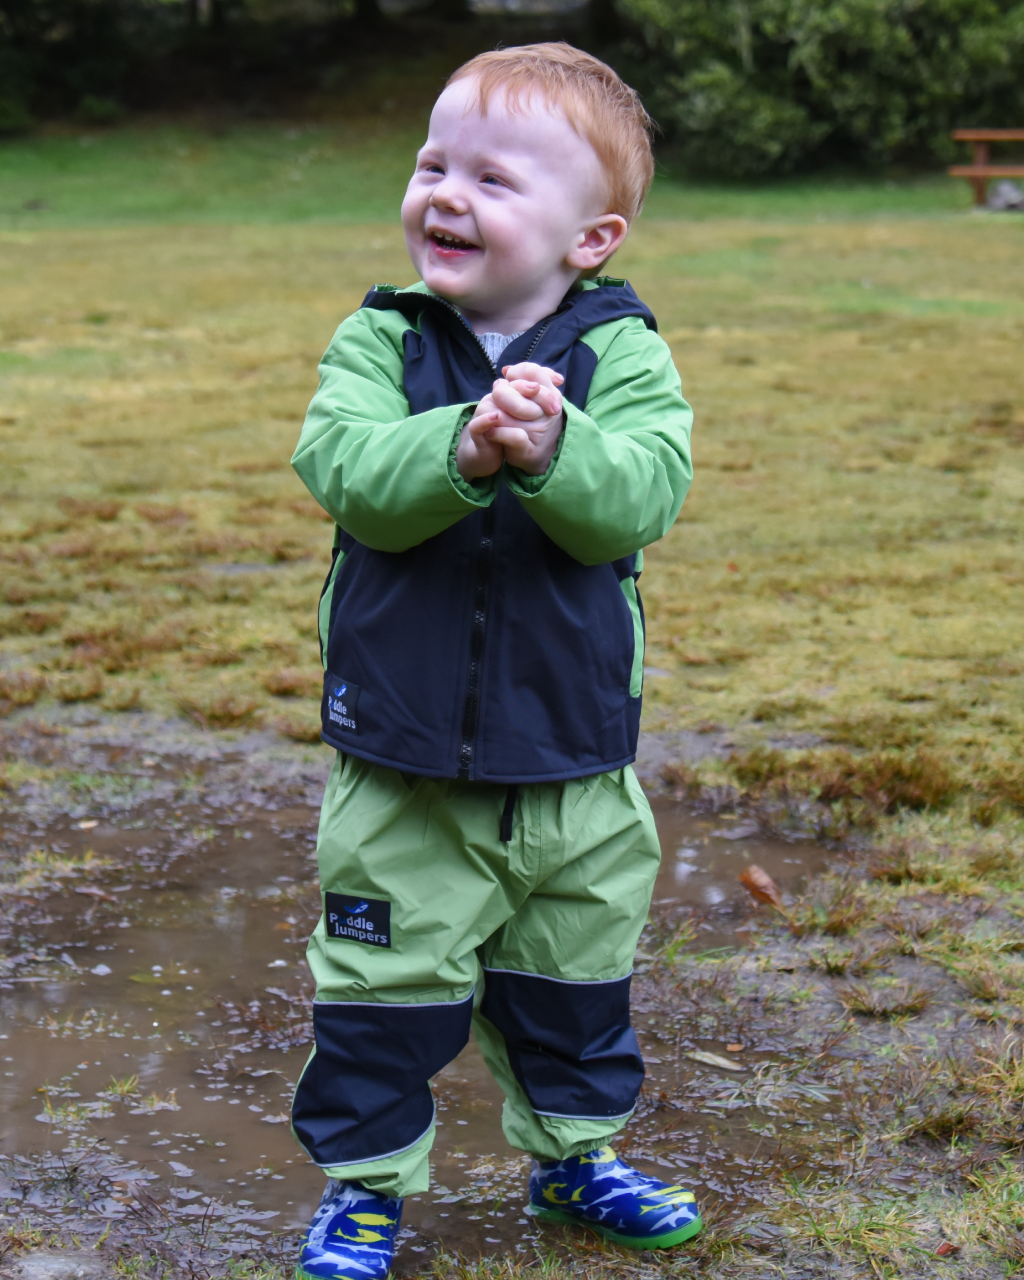 Microfleece Lined Jacket v2 - Avocado/Navy - Kids Outdoor Clothing NZ ...